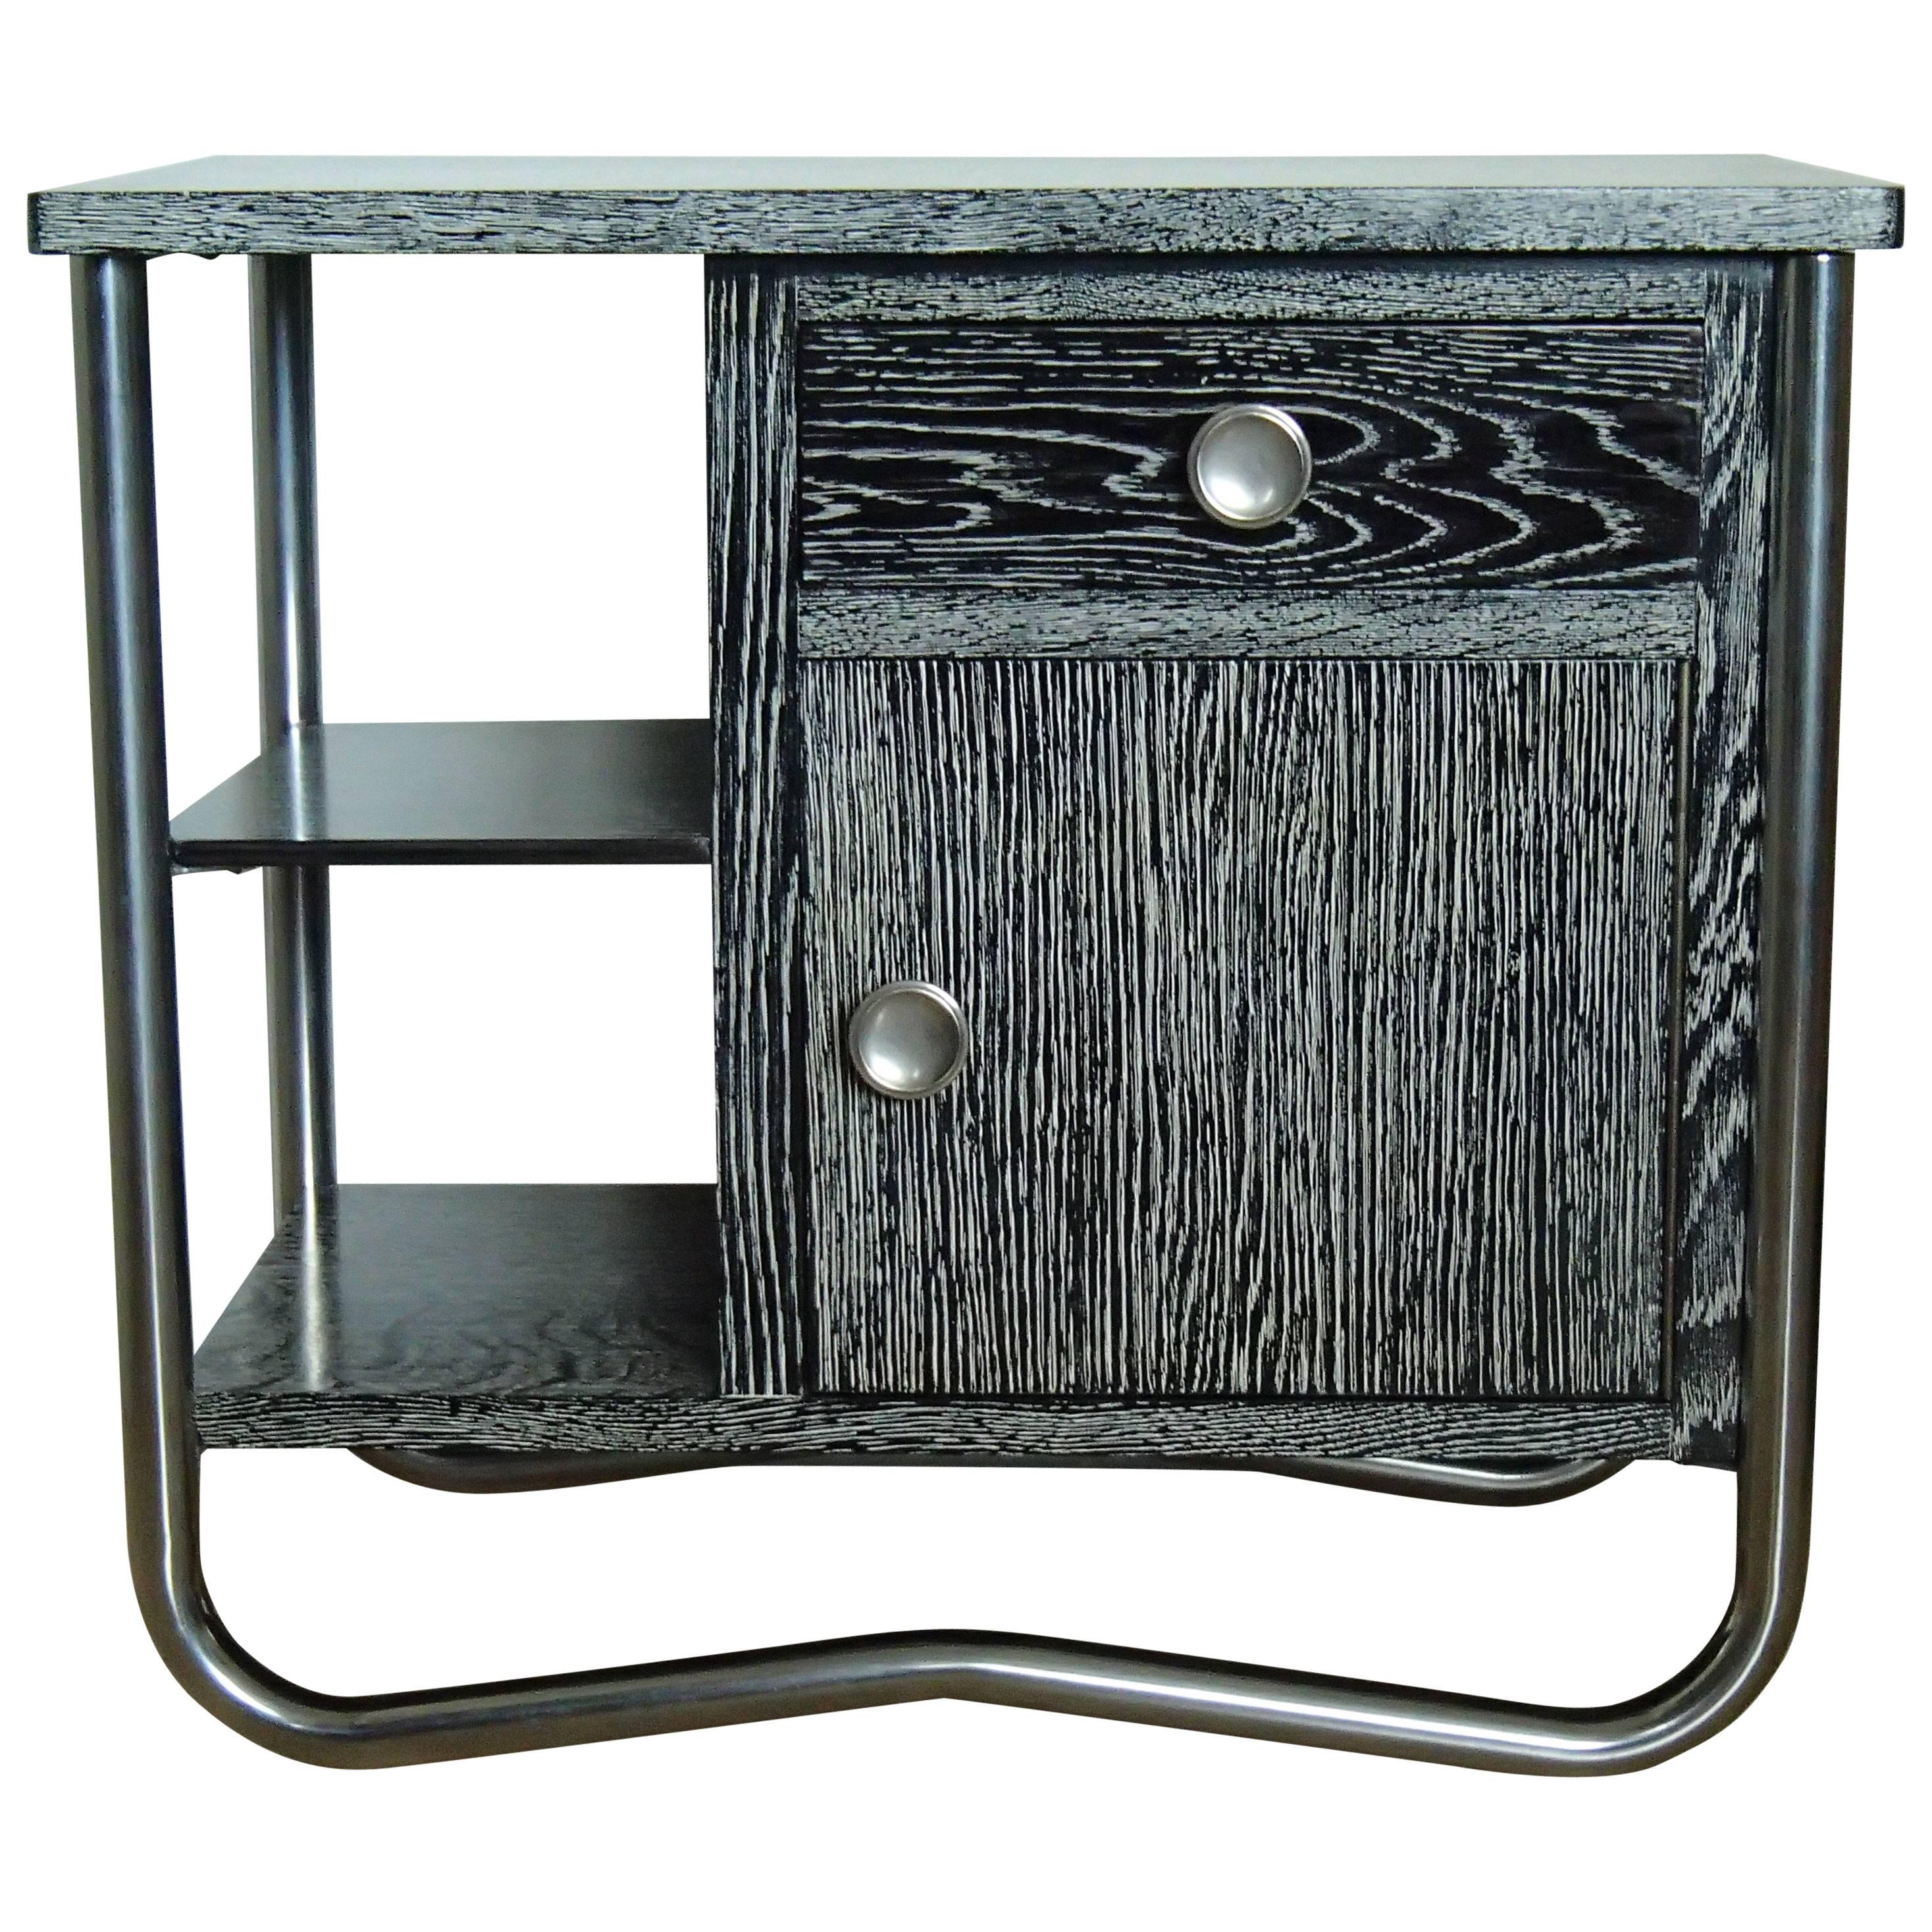 Bauhaus Art Deco Side Table Cabinet Cerused Oak Black and White Chrome